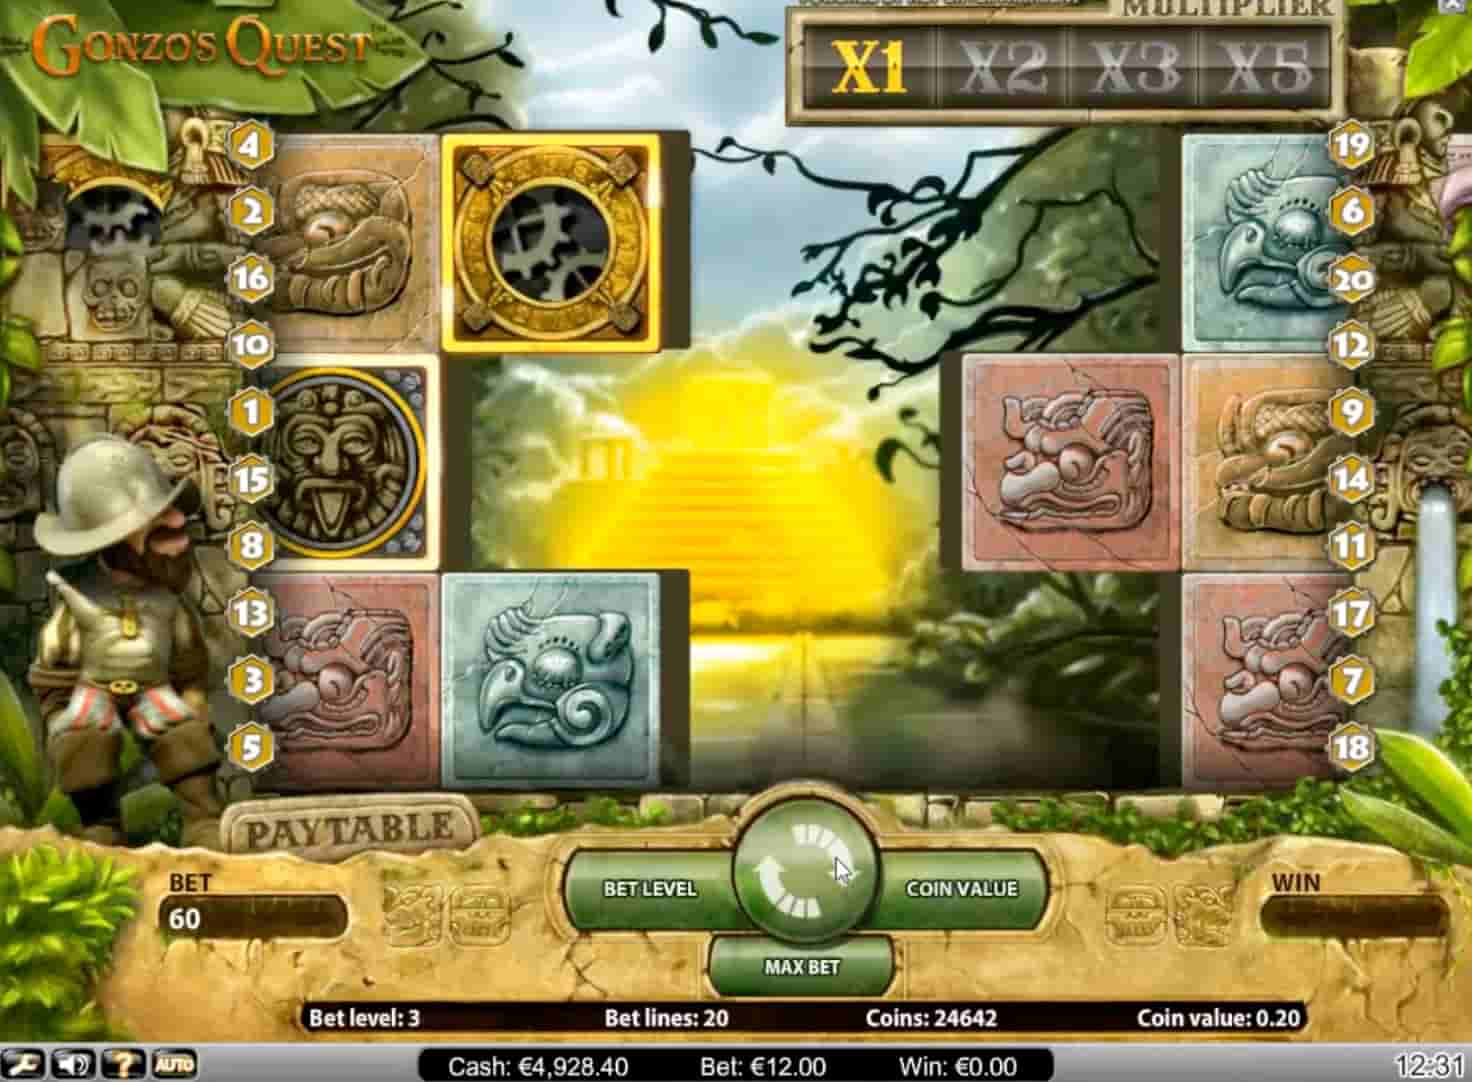 Gonzo’s Quest screenshot 5